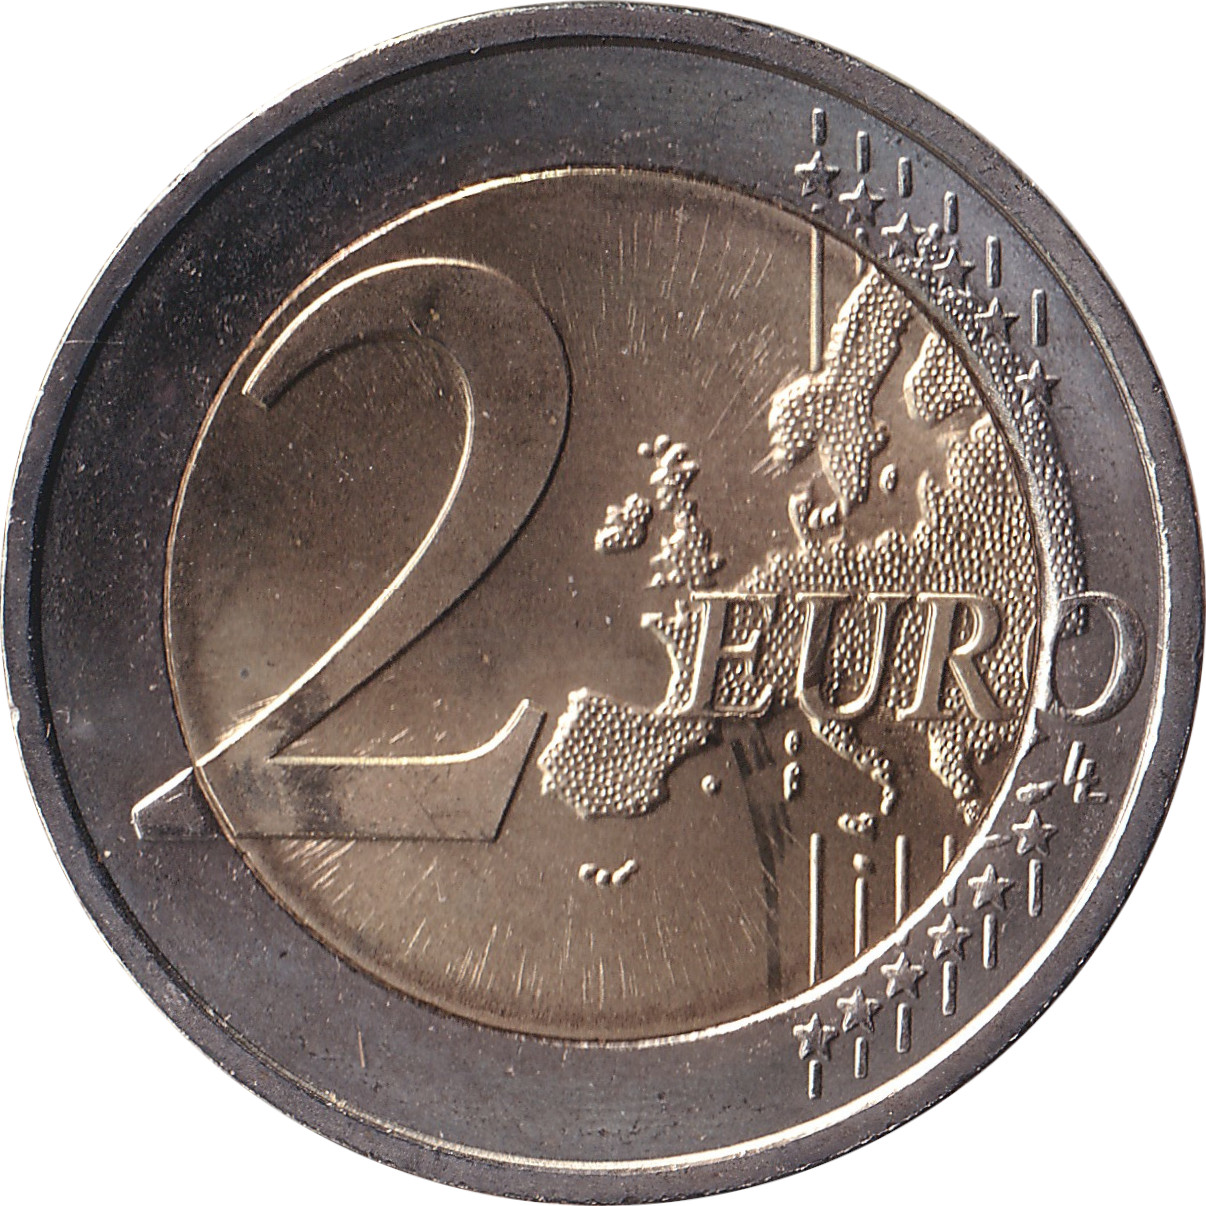 2 euro - Republic - 100 years